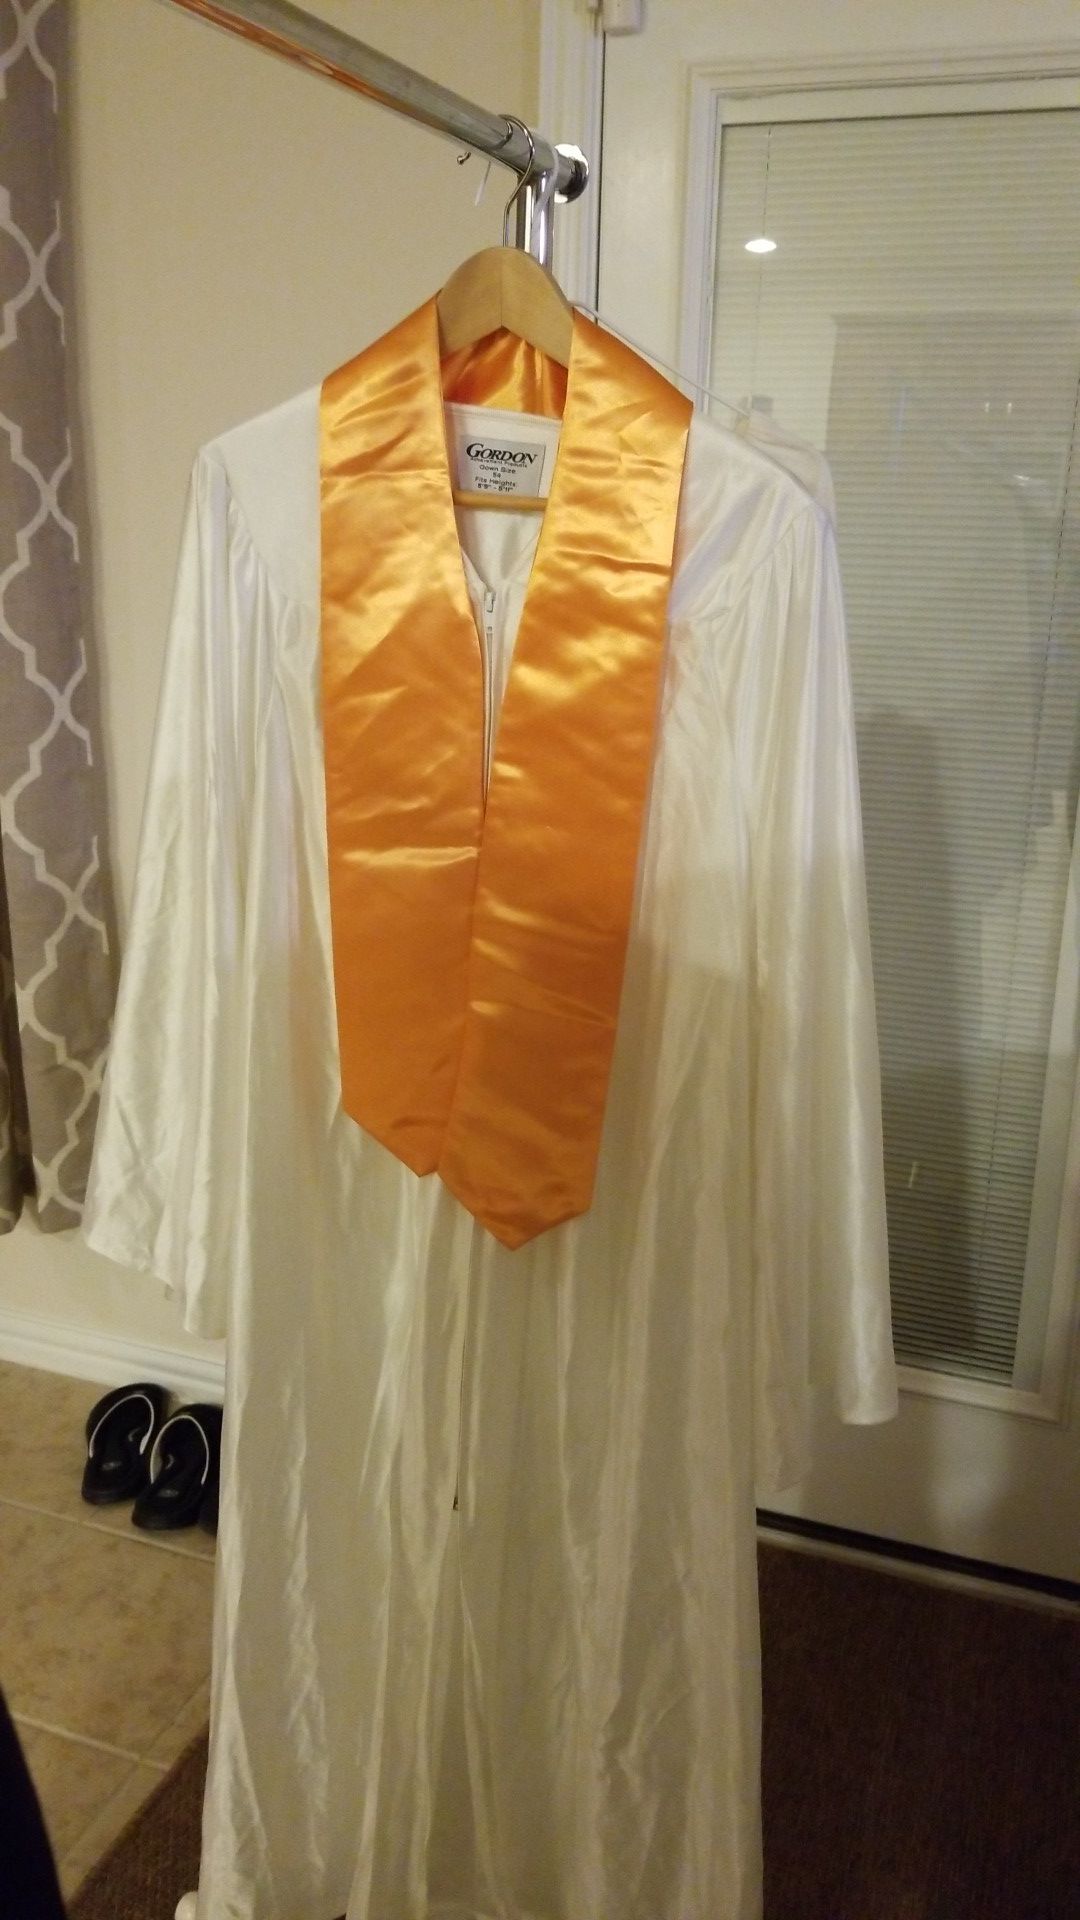 Graduation gown & sash